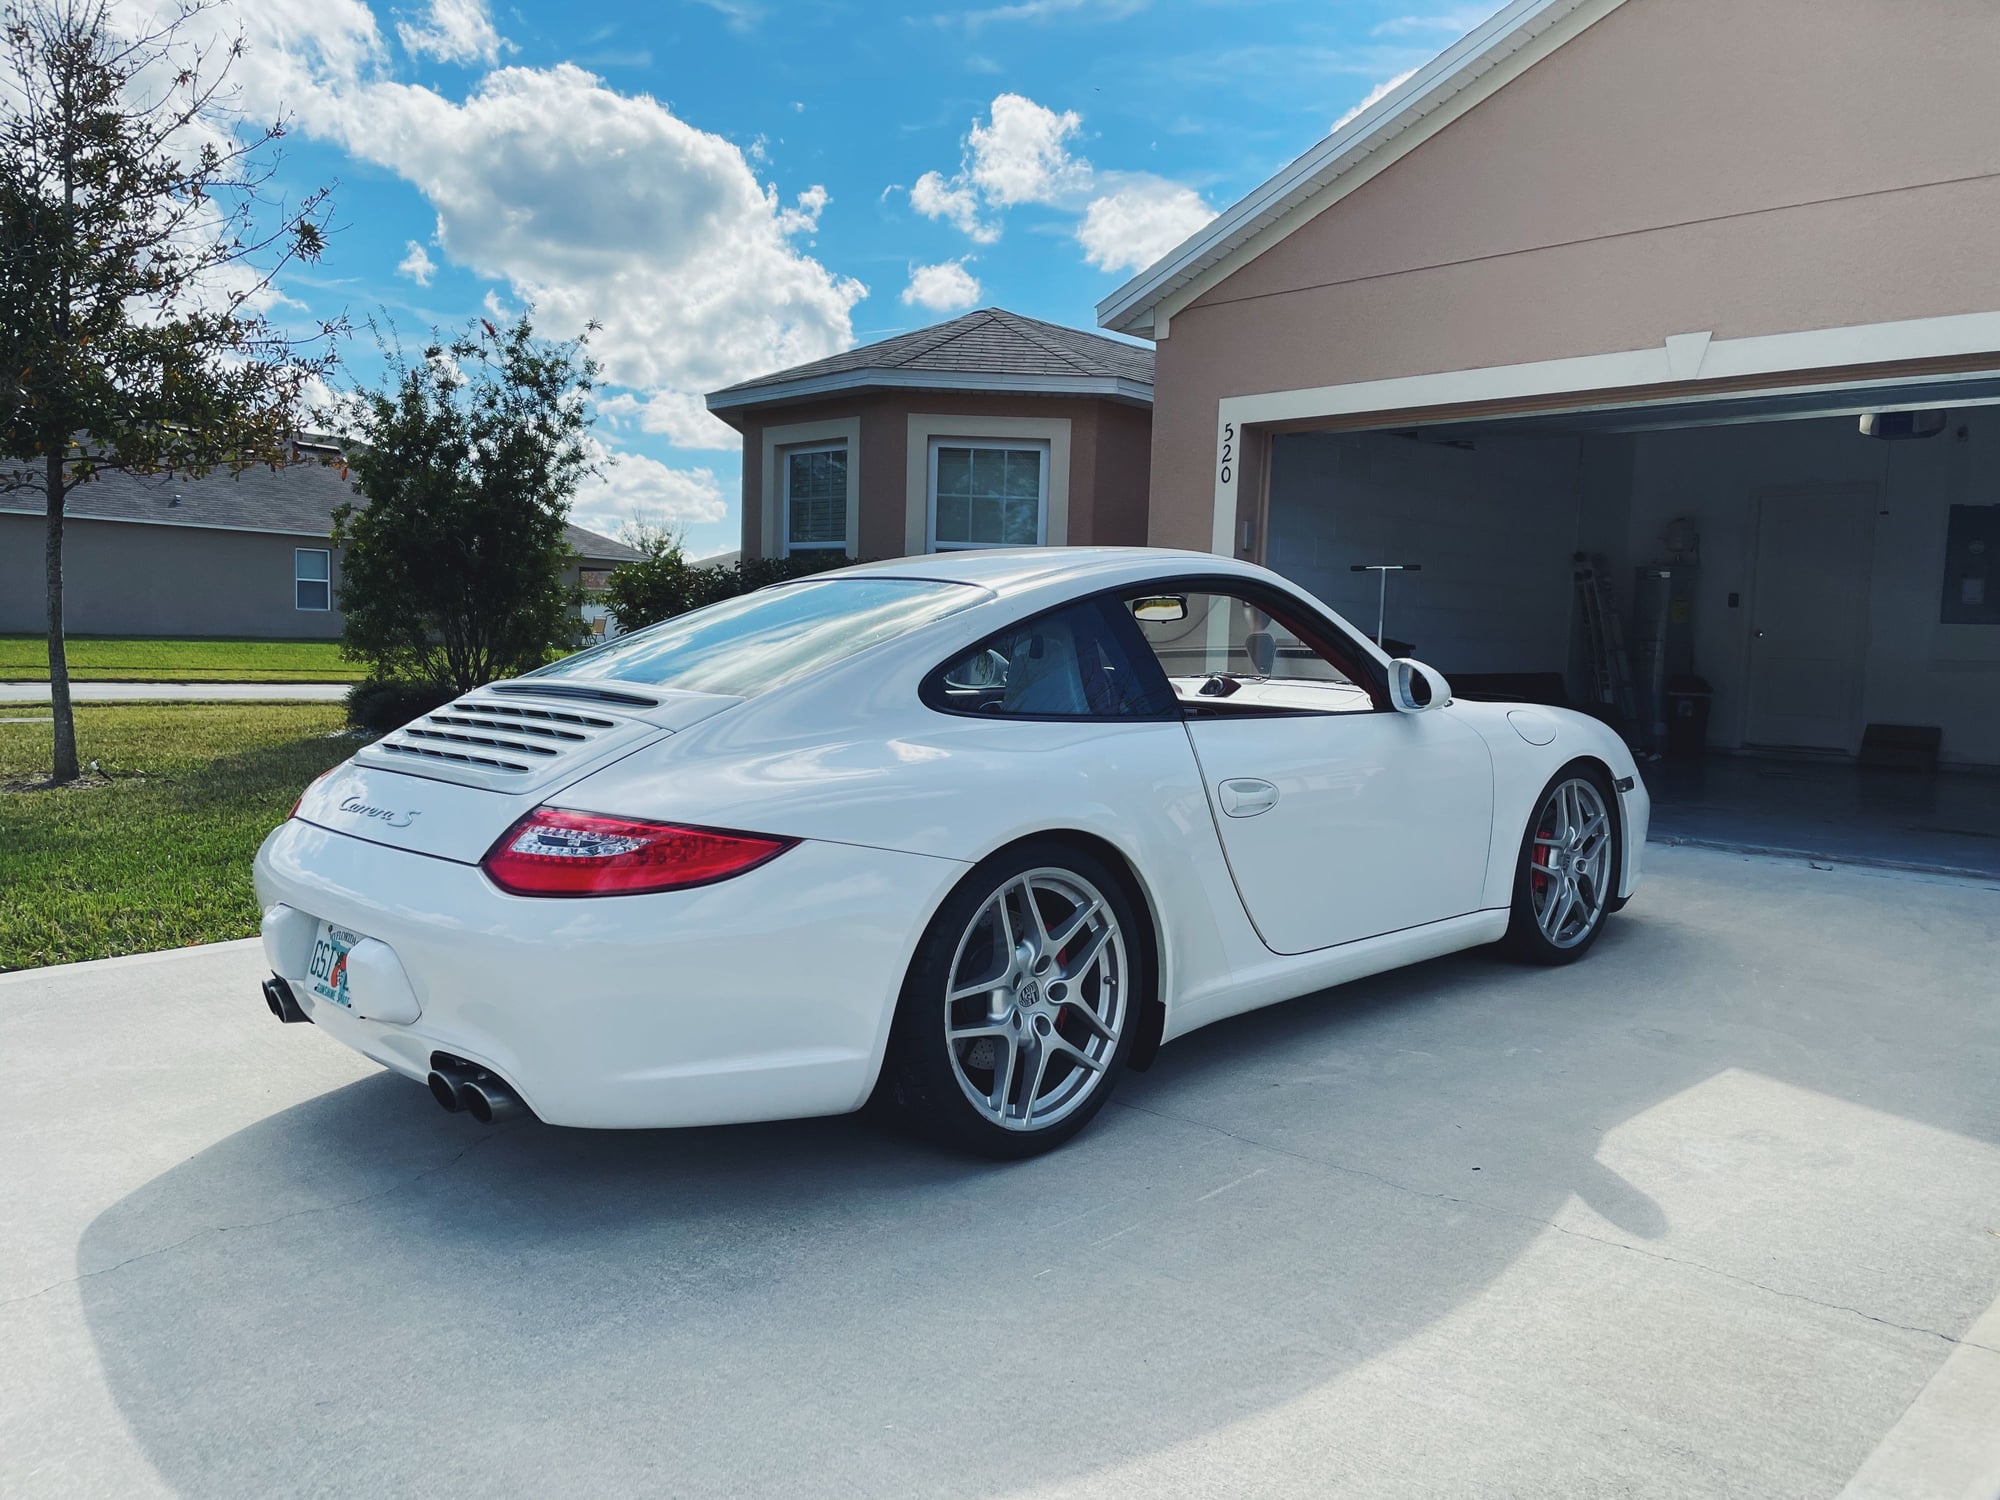 2009 Porsche 911 - OEM 19" 997.2 Split 5 Spoke Wheels - Wheels and Tires/Axles - $1,500 - New Smyrna Beach, FL 32169, United States